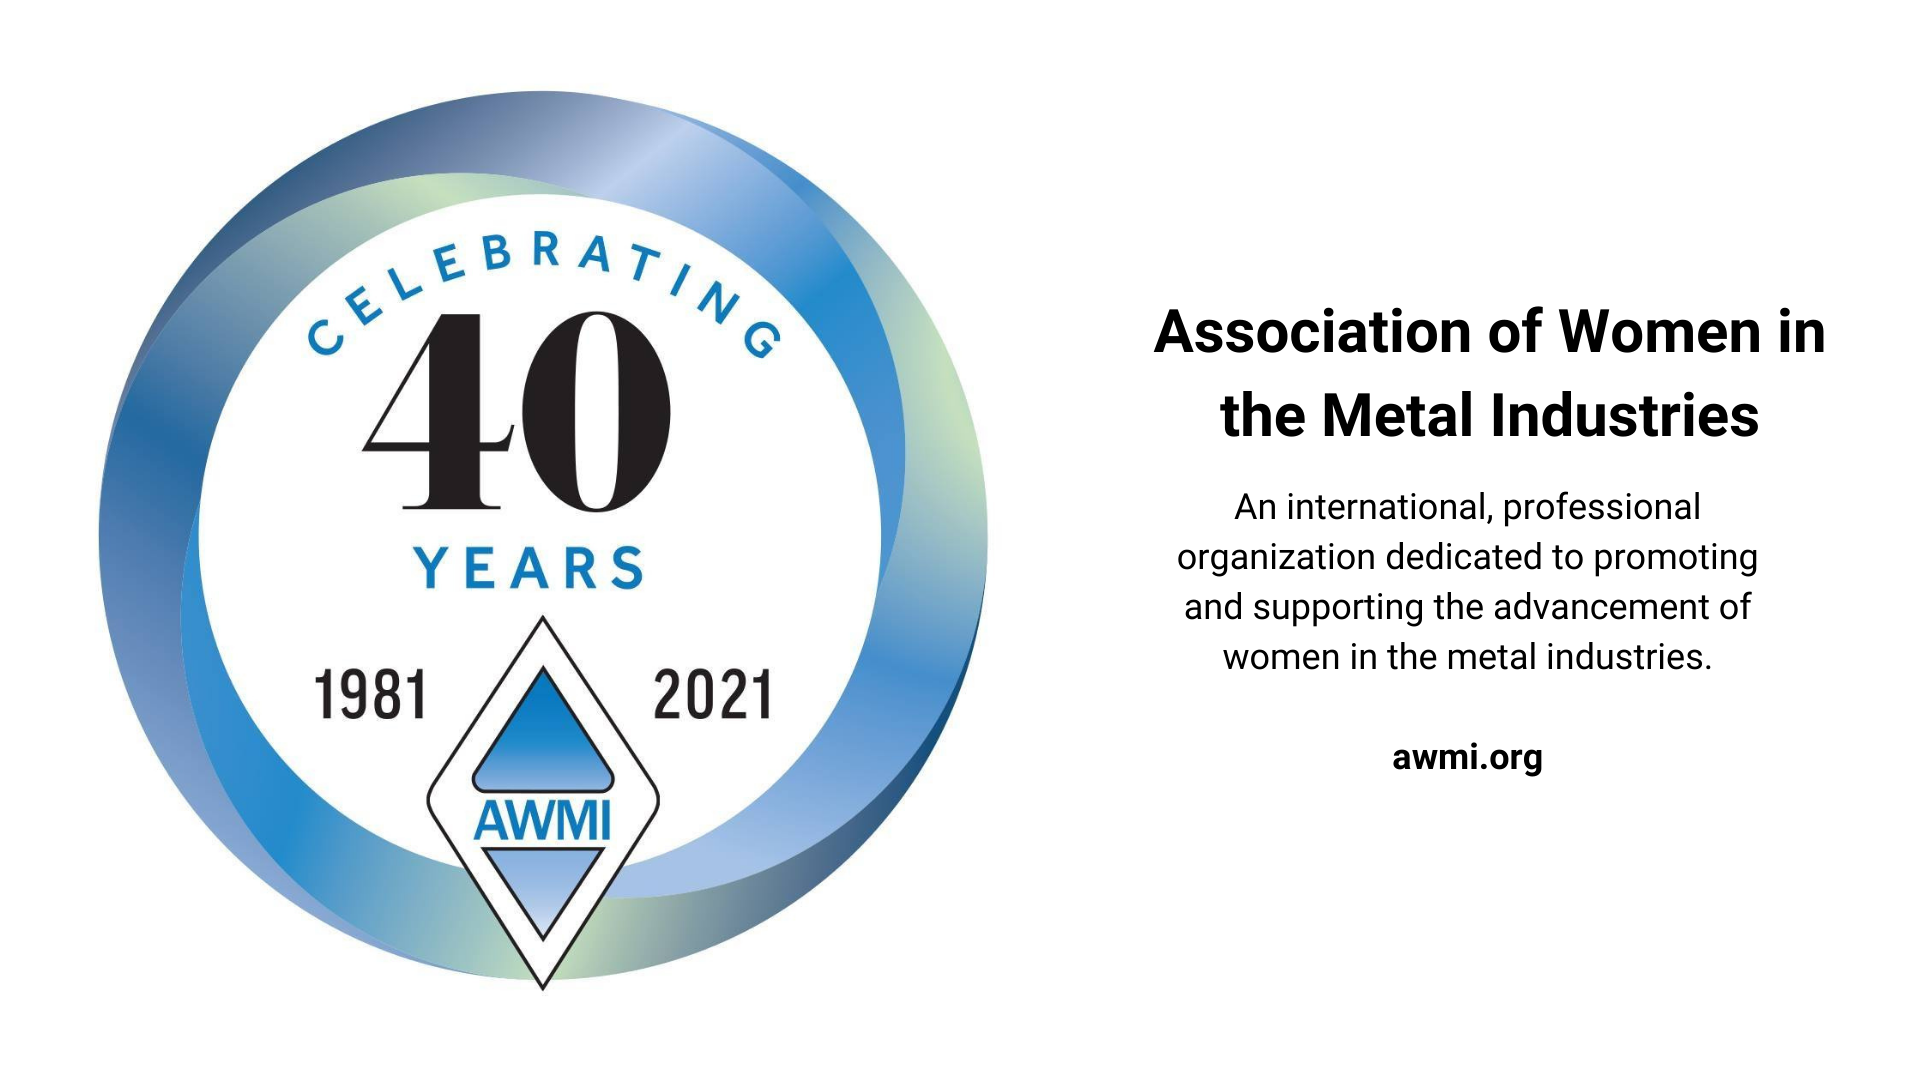 Association of Women in the Metal Industries